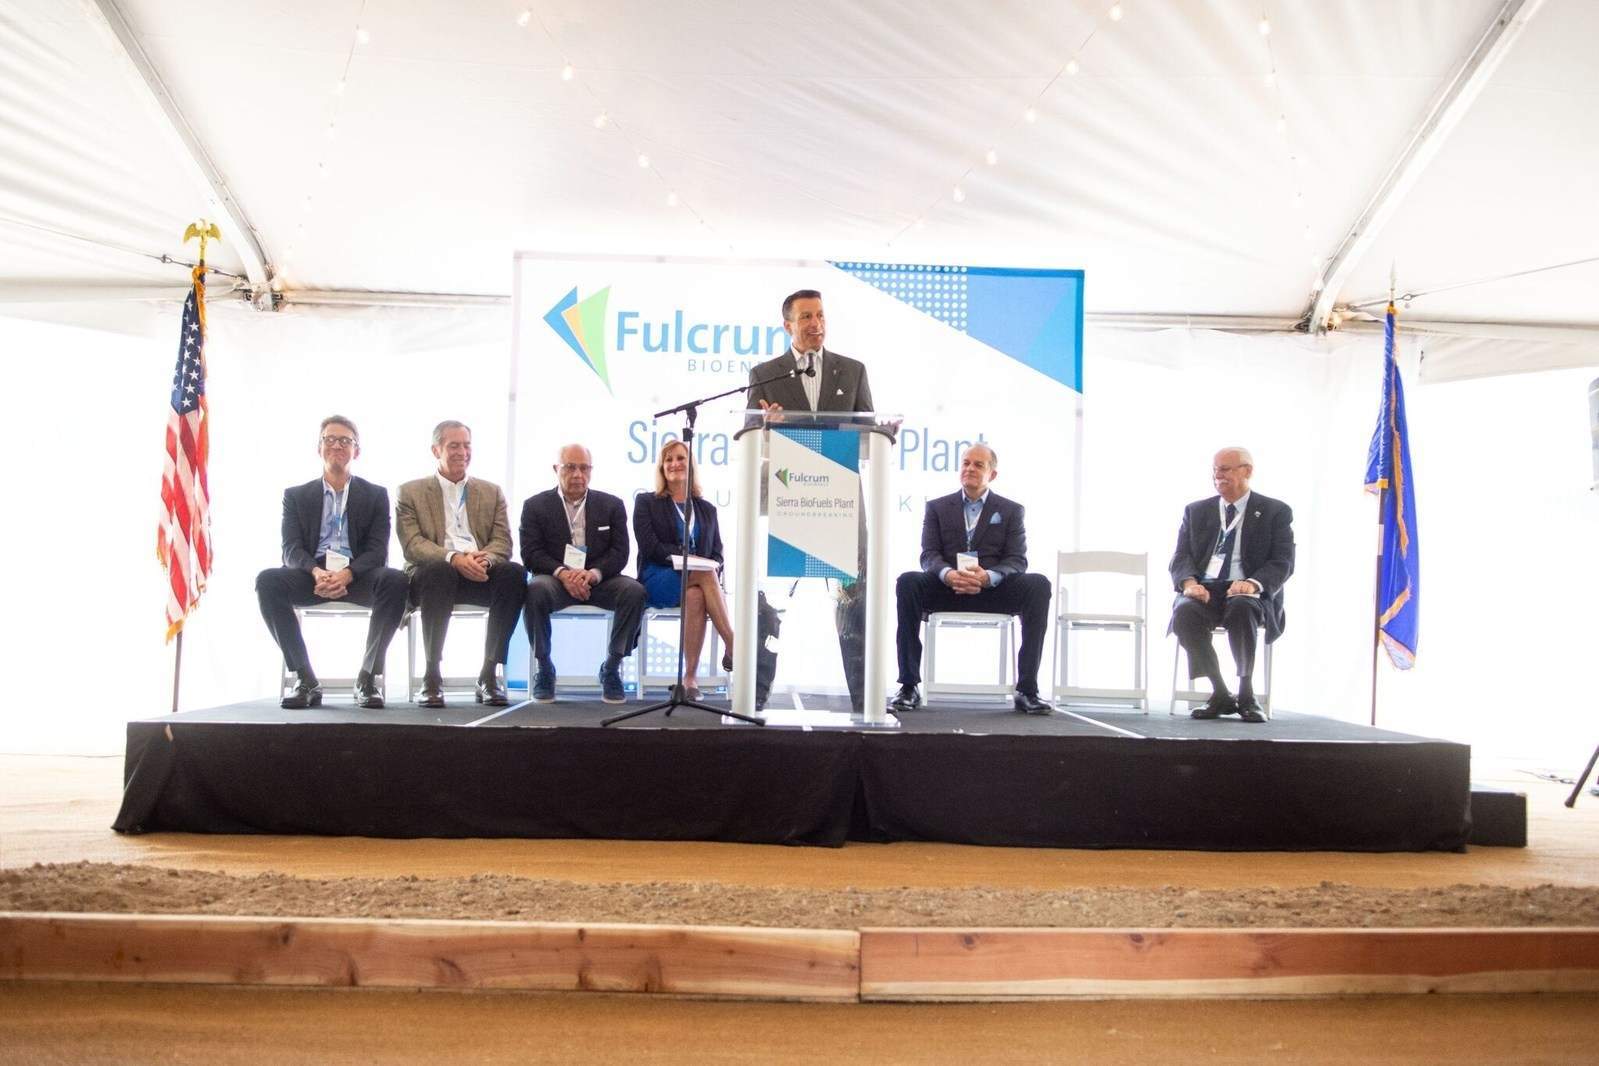 Fulcrum BioEnergy breaks ground on new waste-to-fuel plant in Nevada